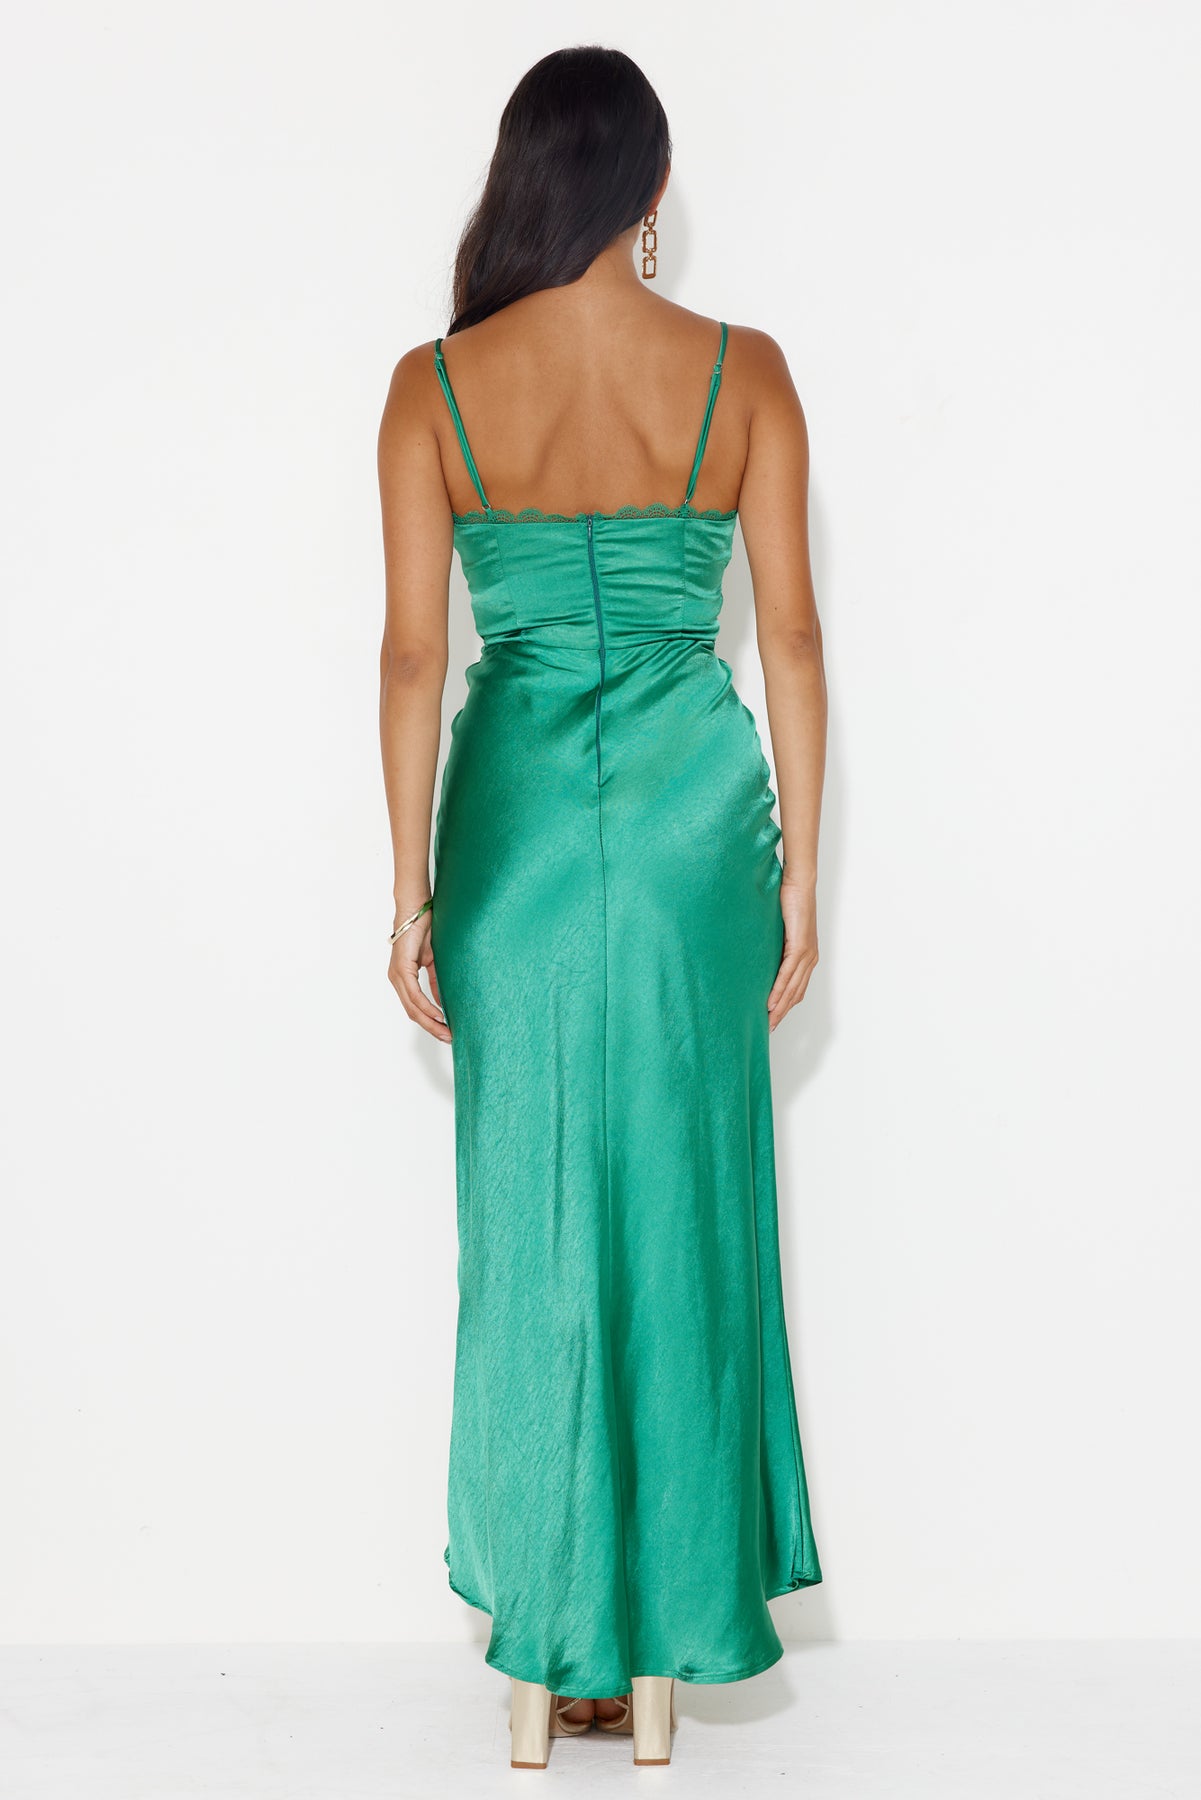 Shop Formal Dress - Dancing Pixie Satin Maxi Dress Green fourth image